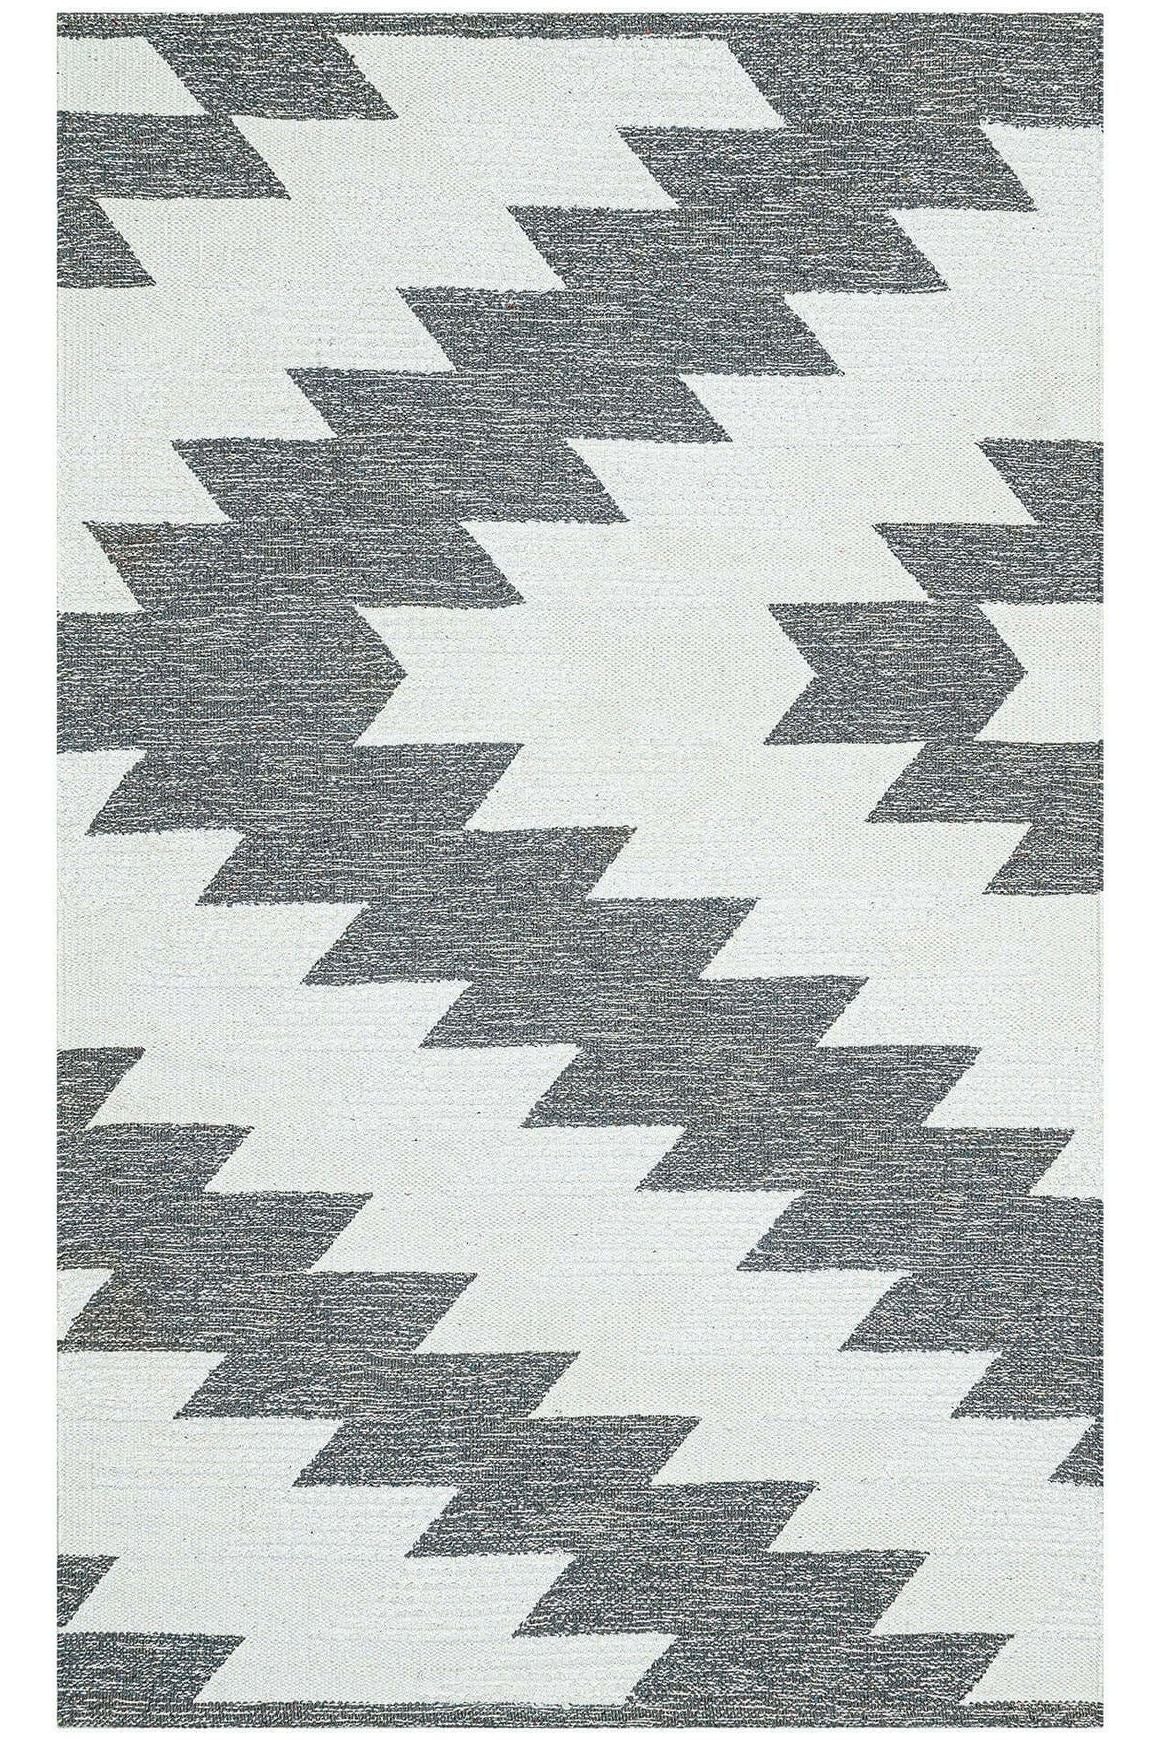 #Turkish_Carpets_Rugs# #Modern_Carpets# #Abrash_Carpets#Afr 02 Silver White